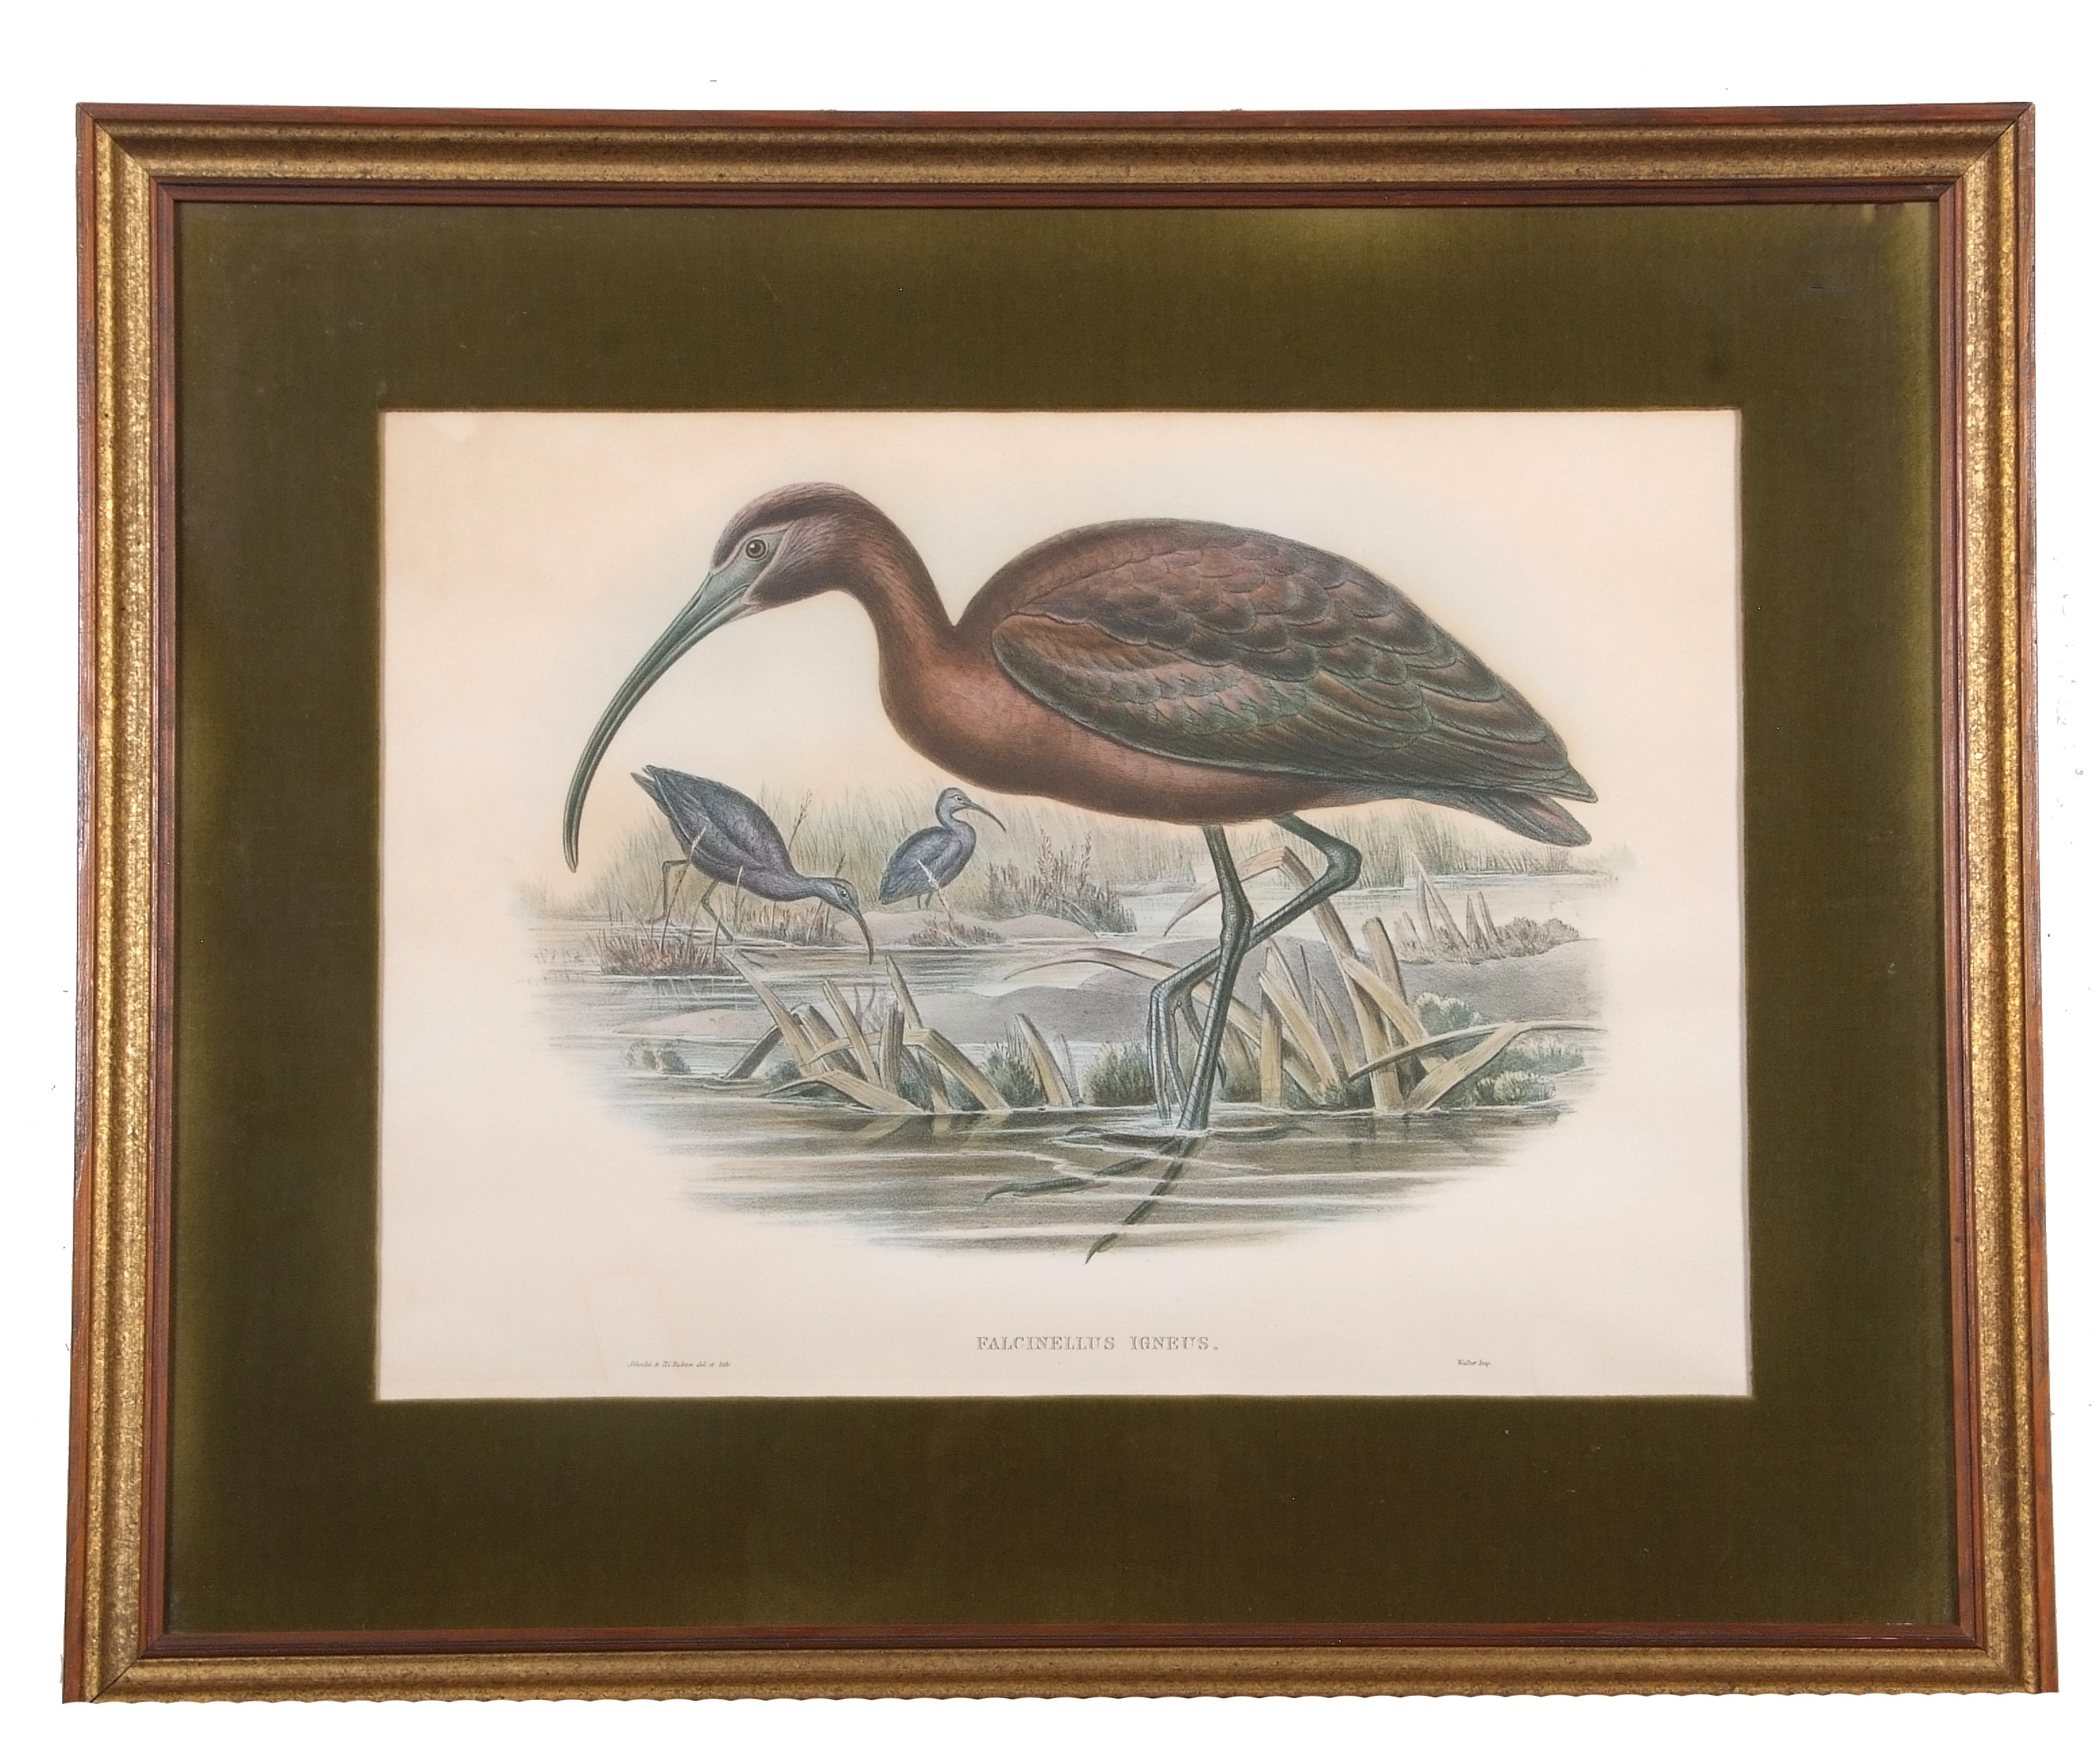 'Falcinellus Igneus' (The Glossy Ibis) - Henry Constantine Richter